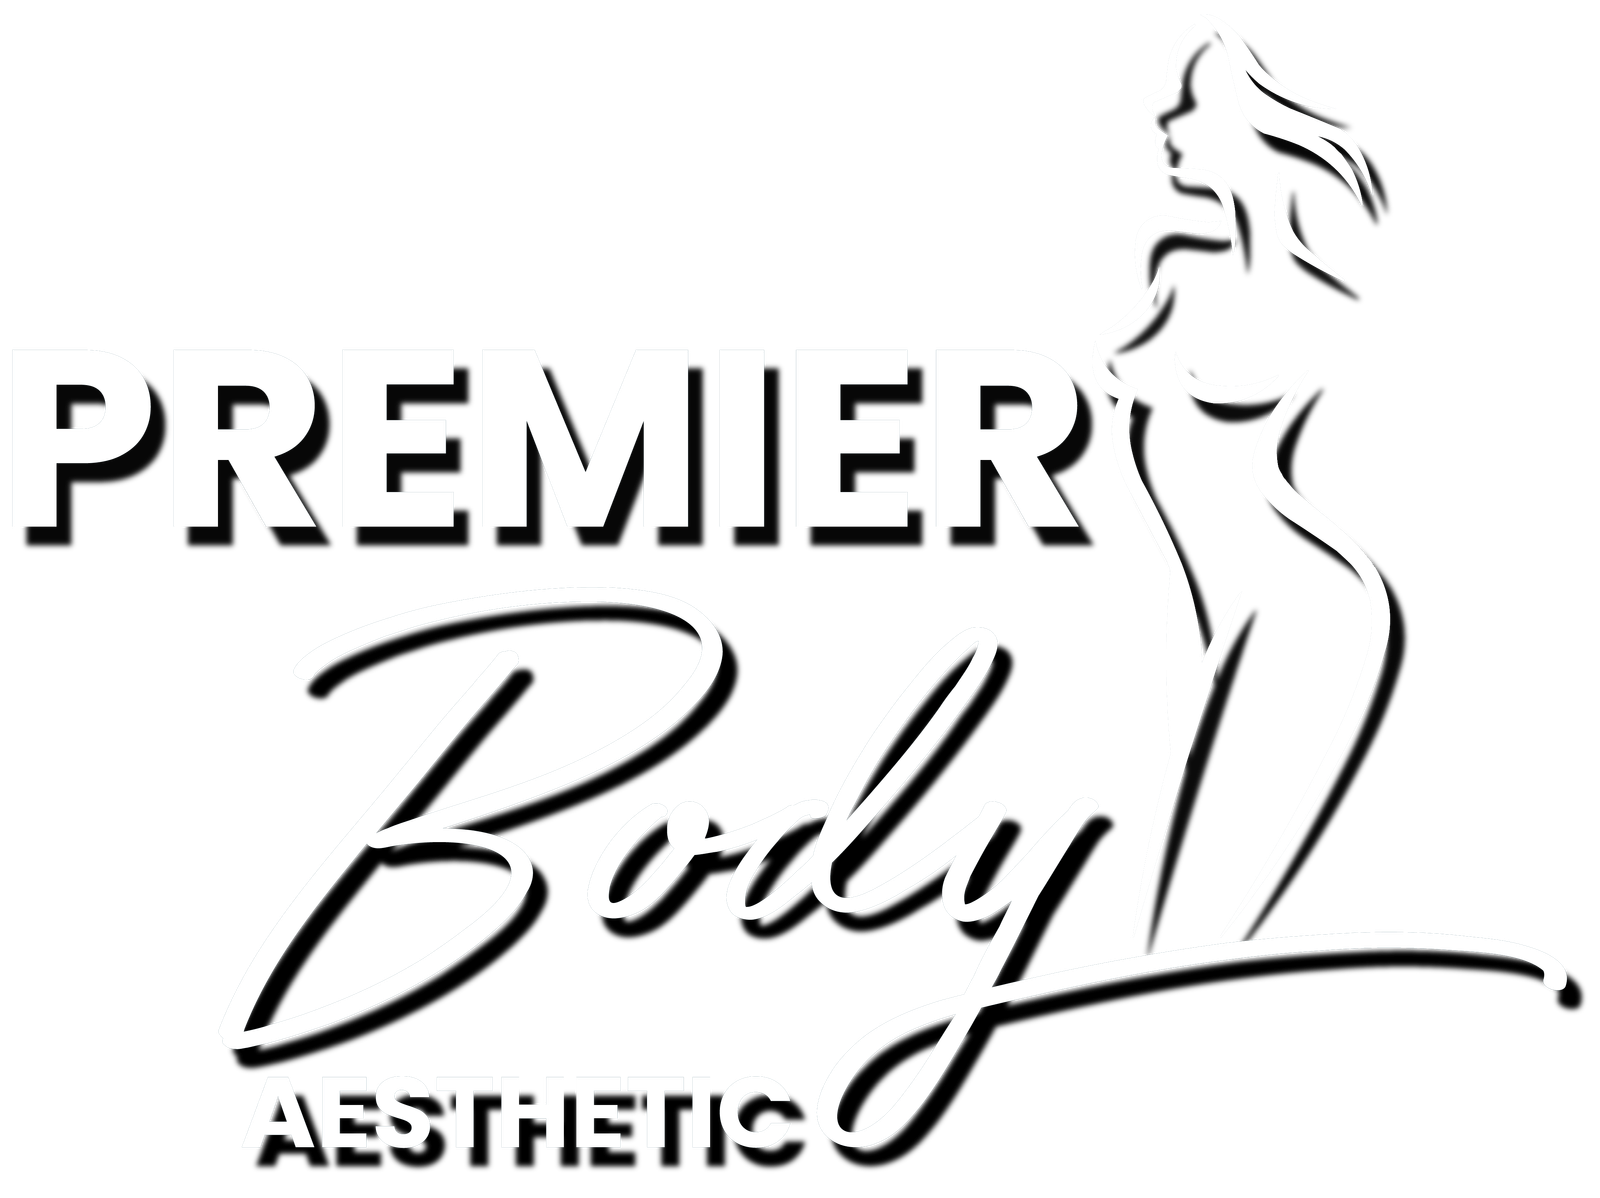 logo premier body aesthetic